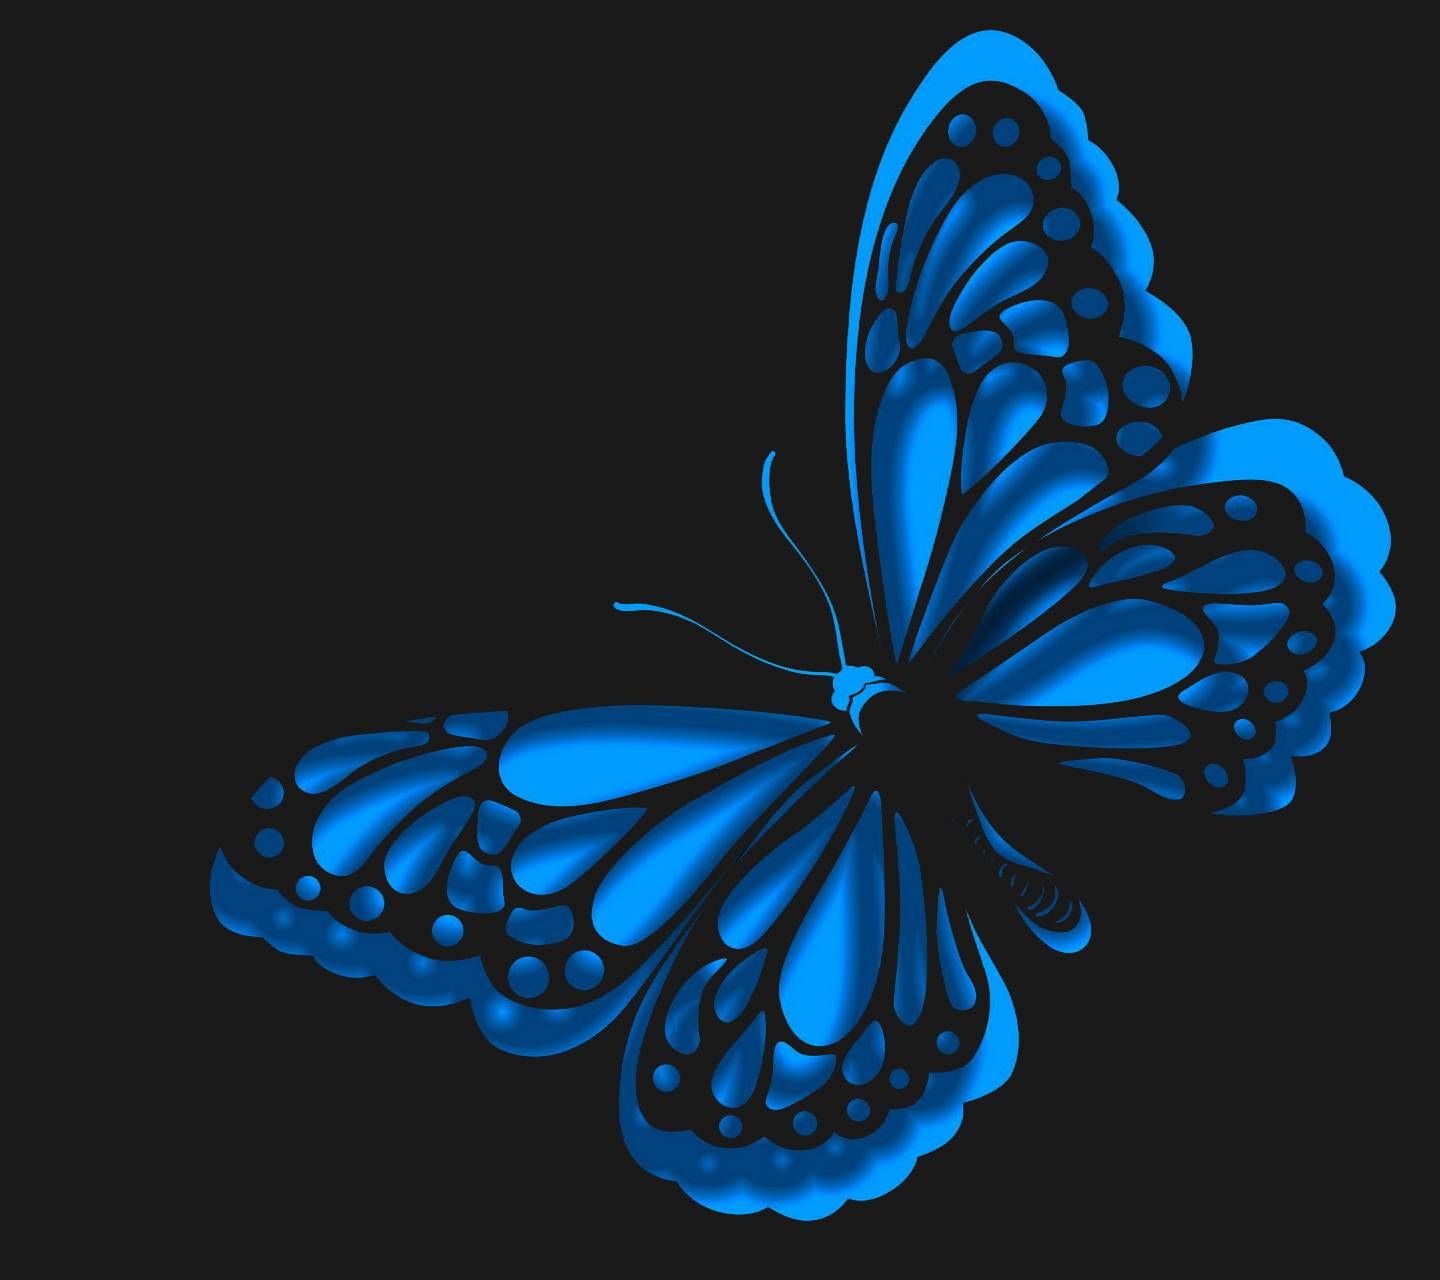 47 Blue Butterfly HD Wallpaper  WallpaperSafari